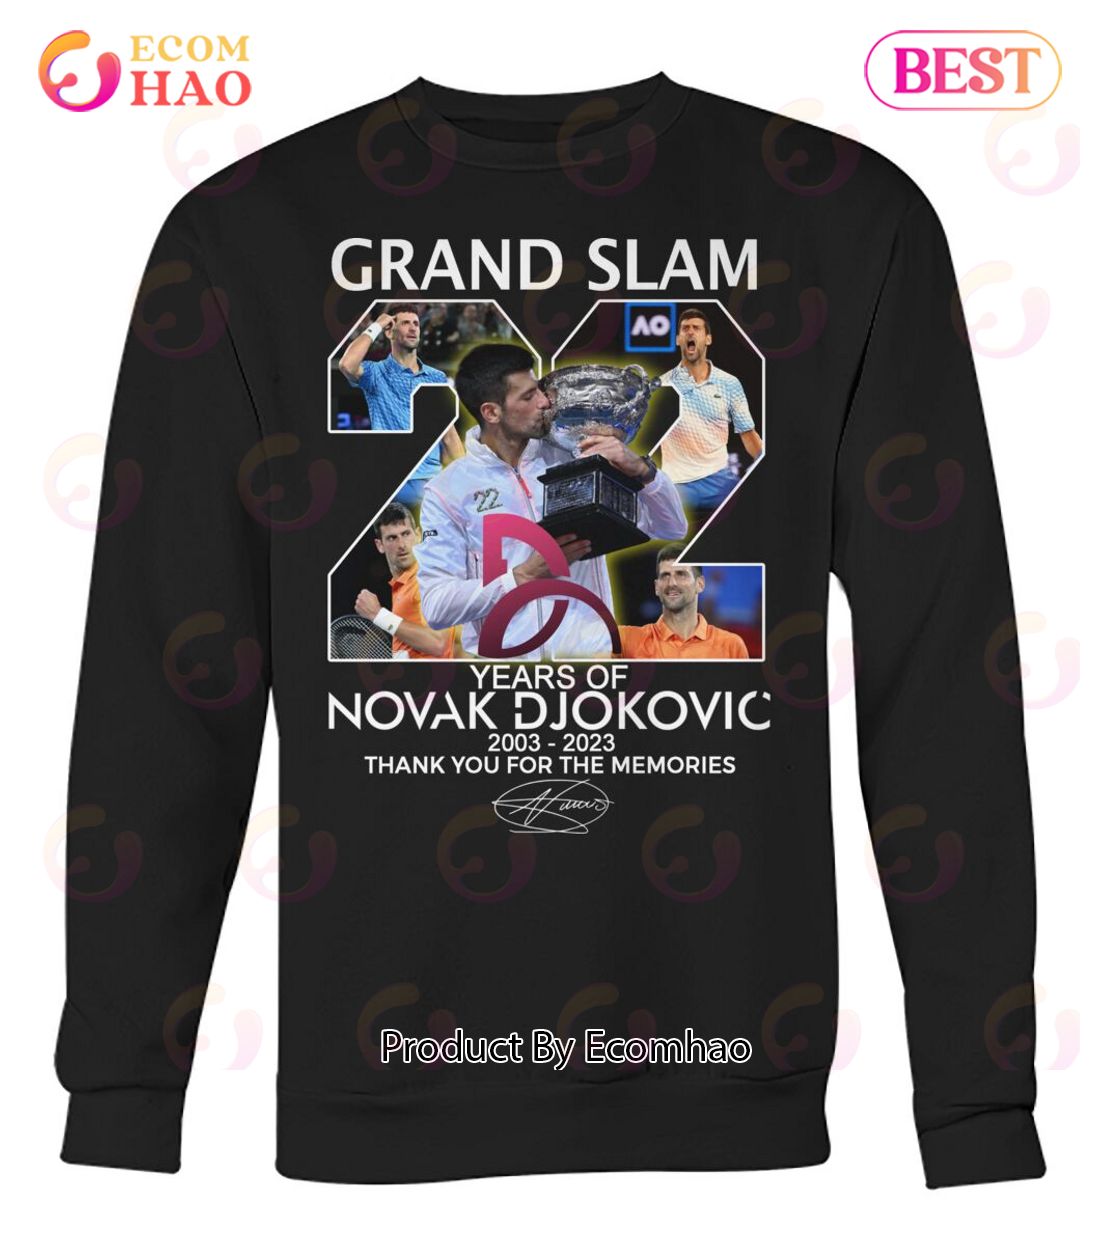 Grand Slam 22 Years Of Novak Djokovic 2003 - 2023 Thank You For The Memories T-Shirt